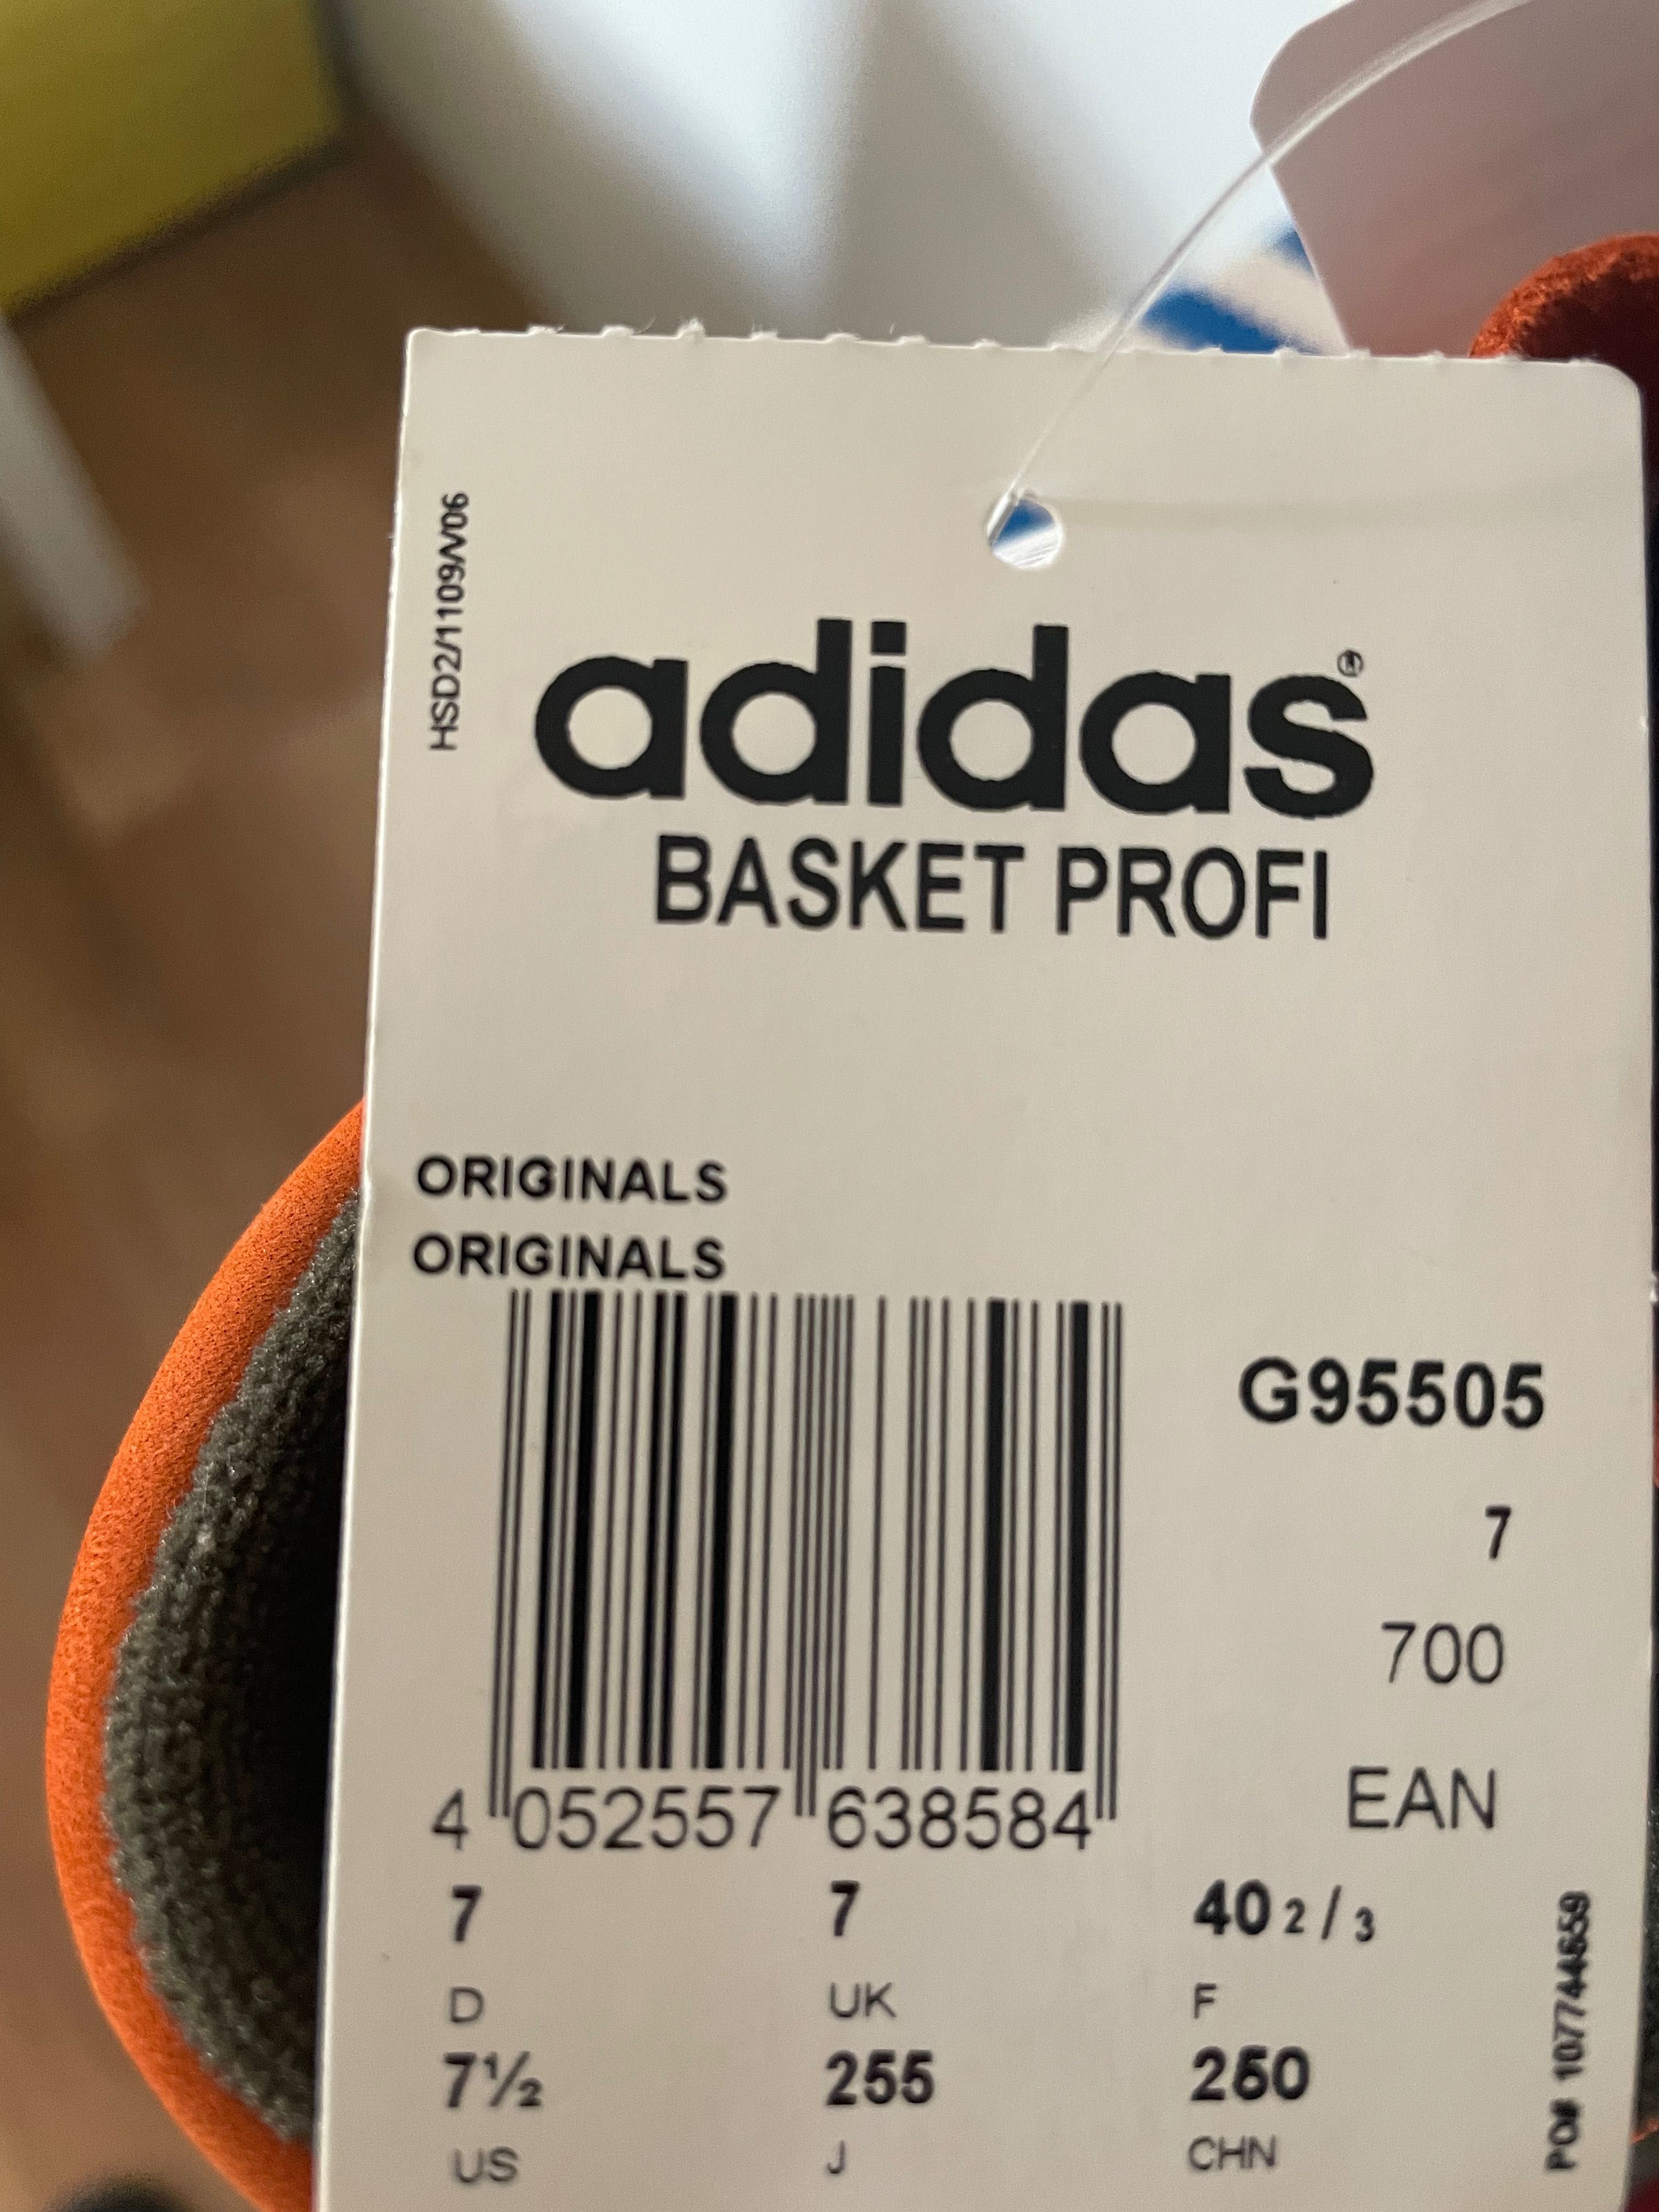 Adidas Basket Profi